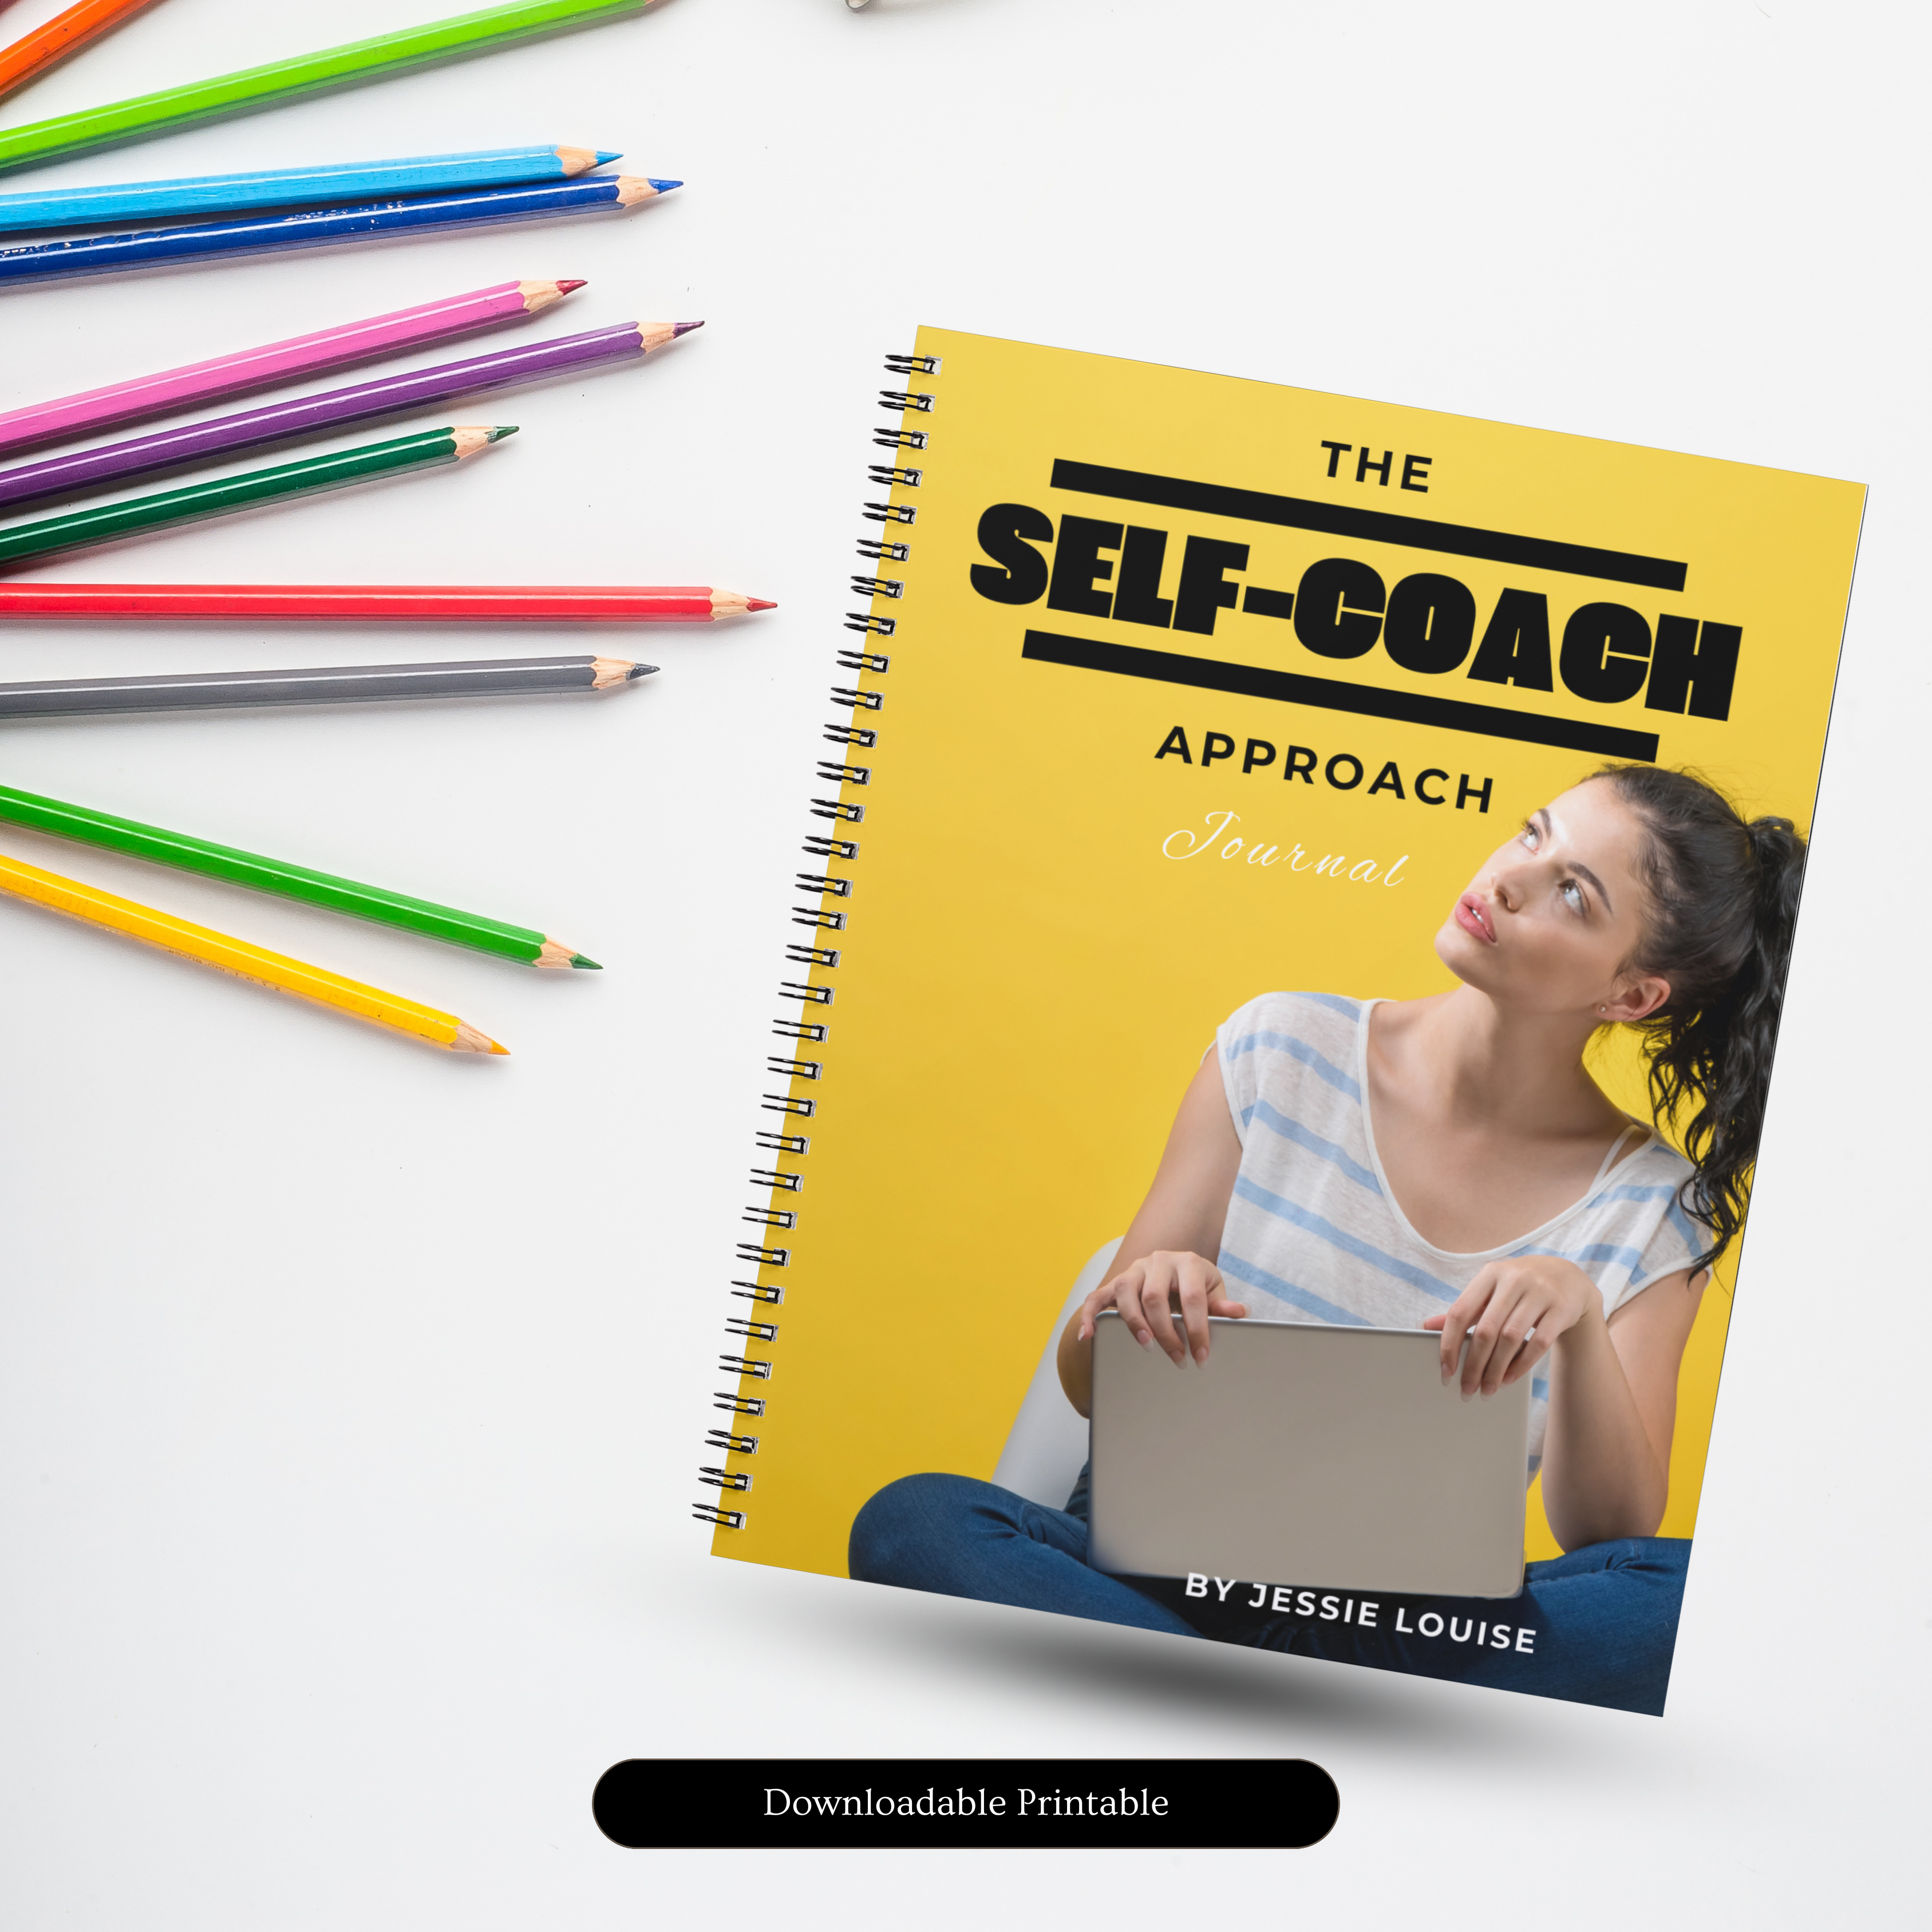 The Self-Coach Approach